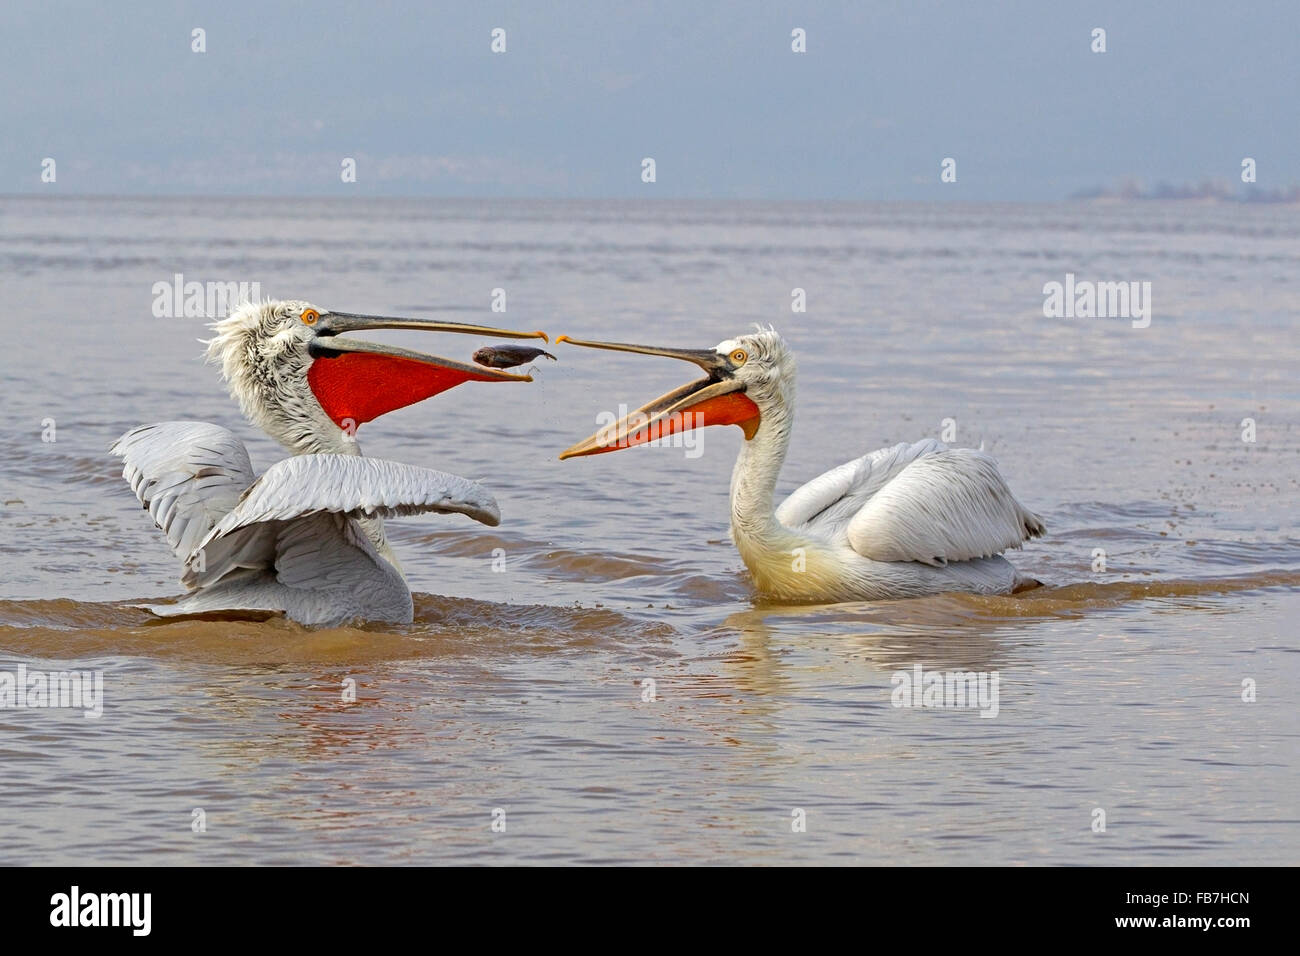 Dalmatian pelicans fighting over fish Stock Photo